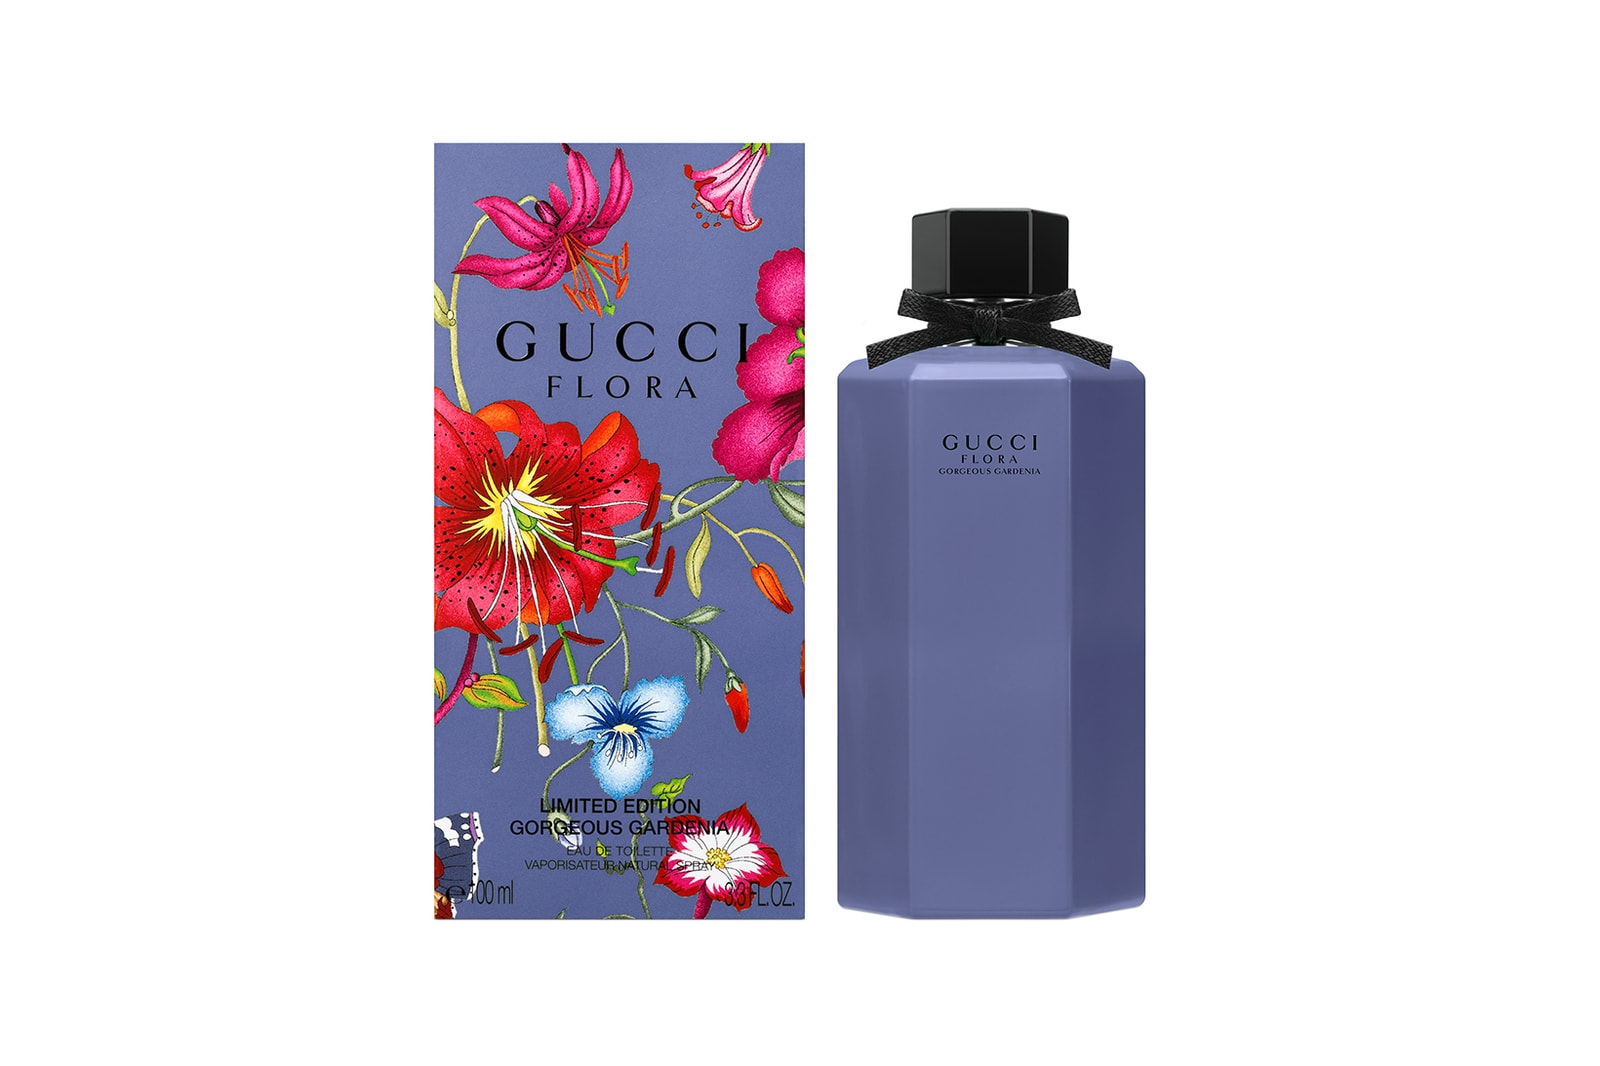 Gucci flora perfume